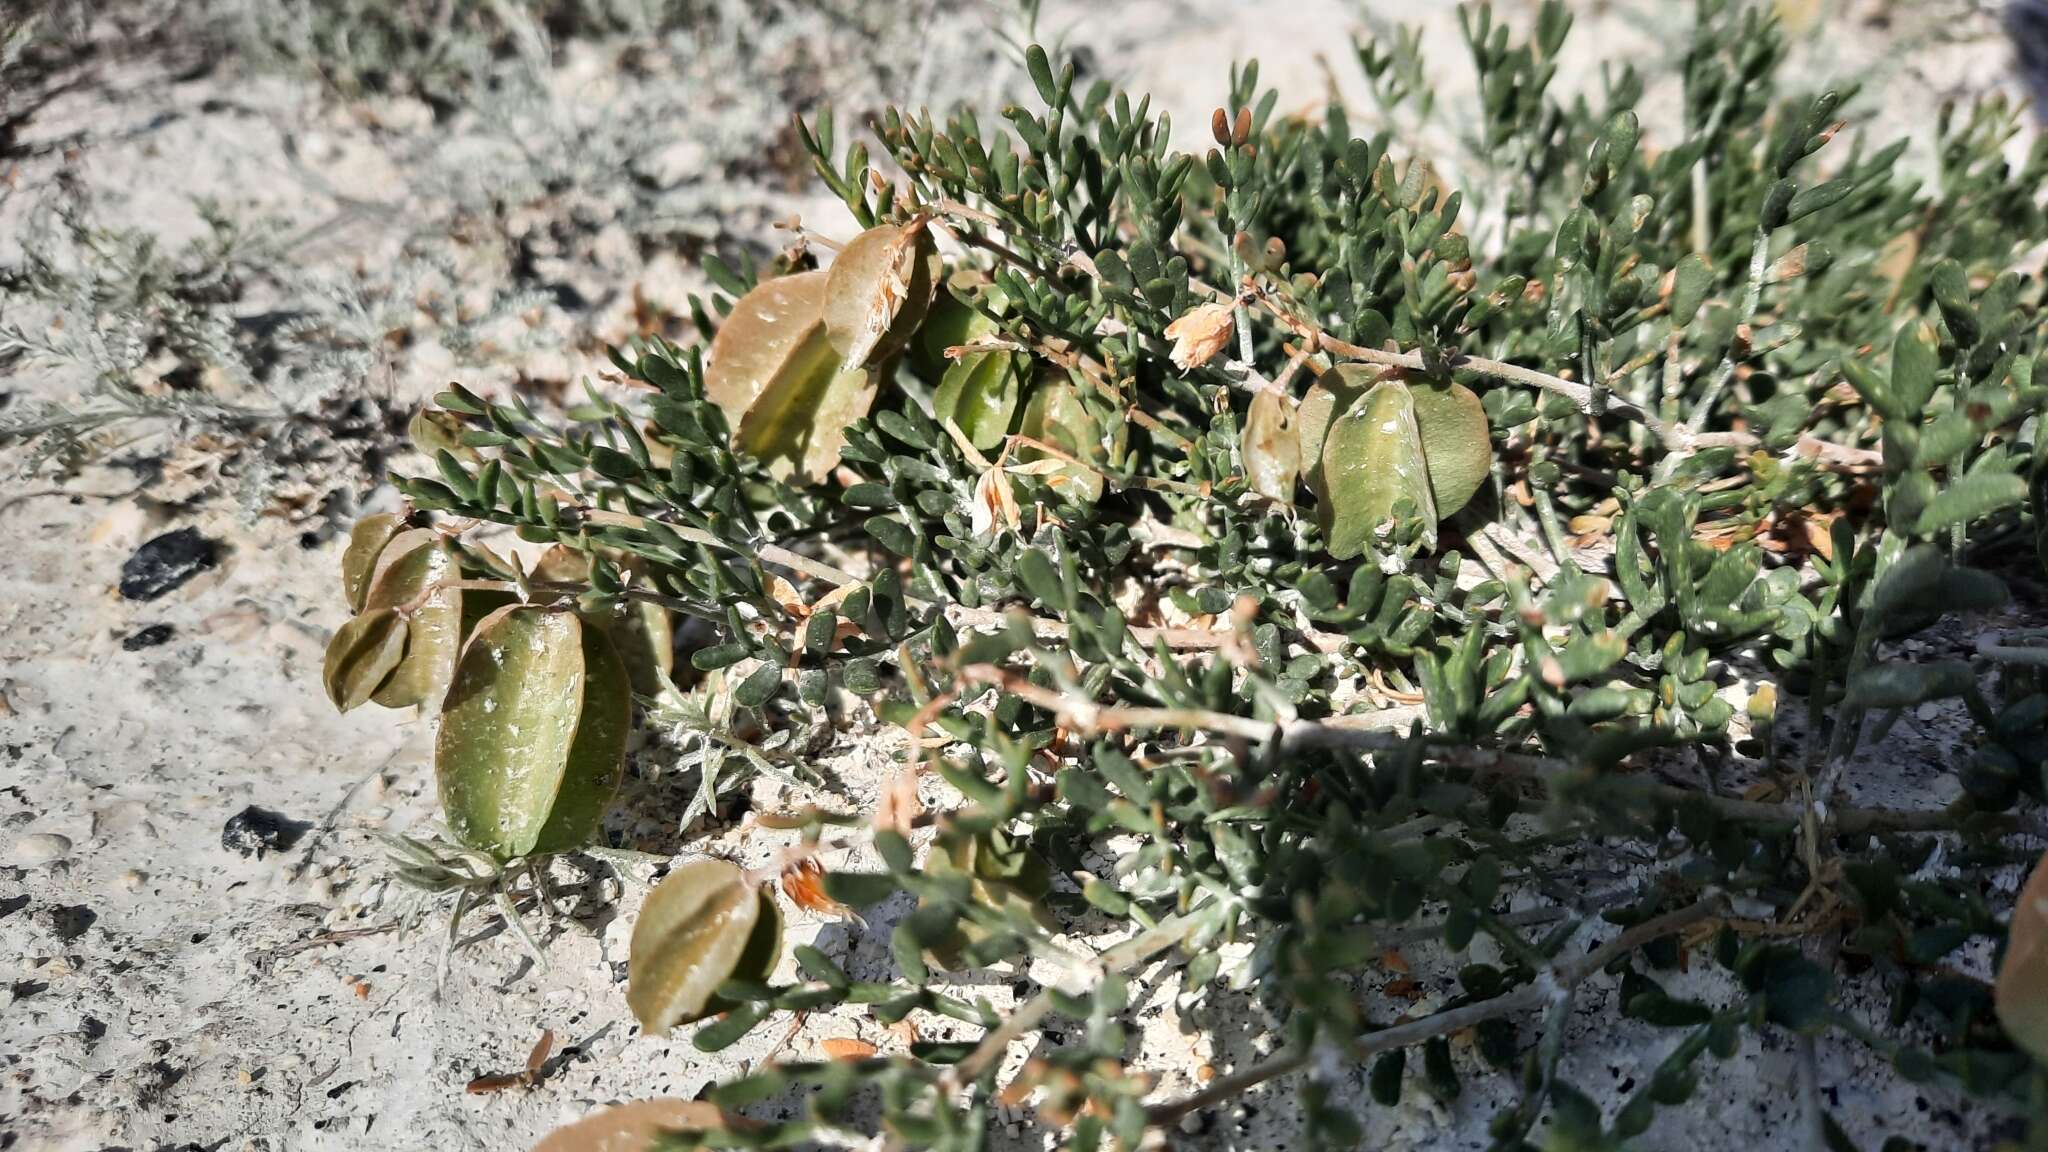 Image of Zygophyllum macropterum C. A. Mey.